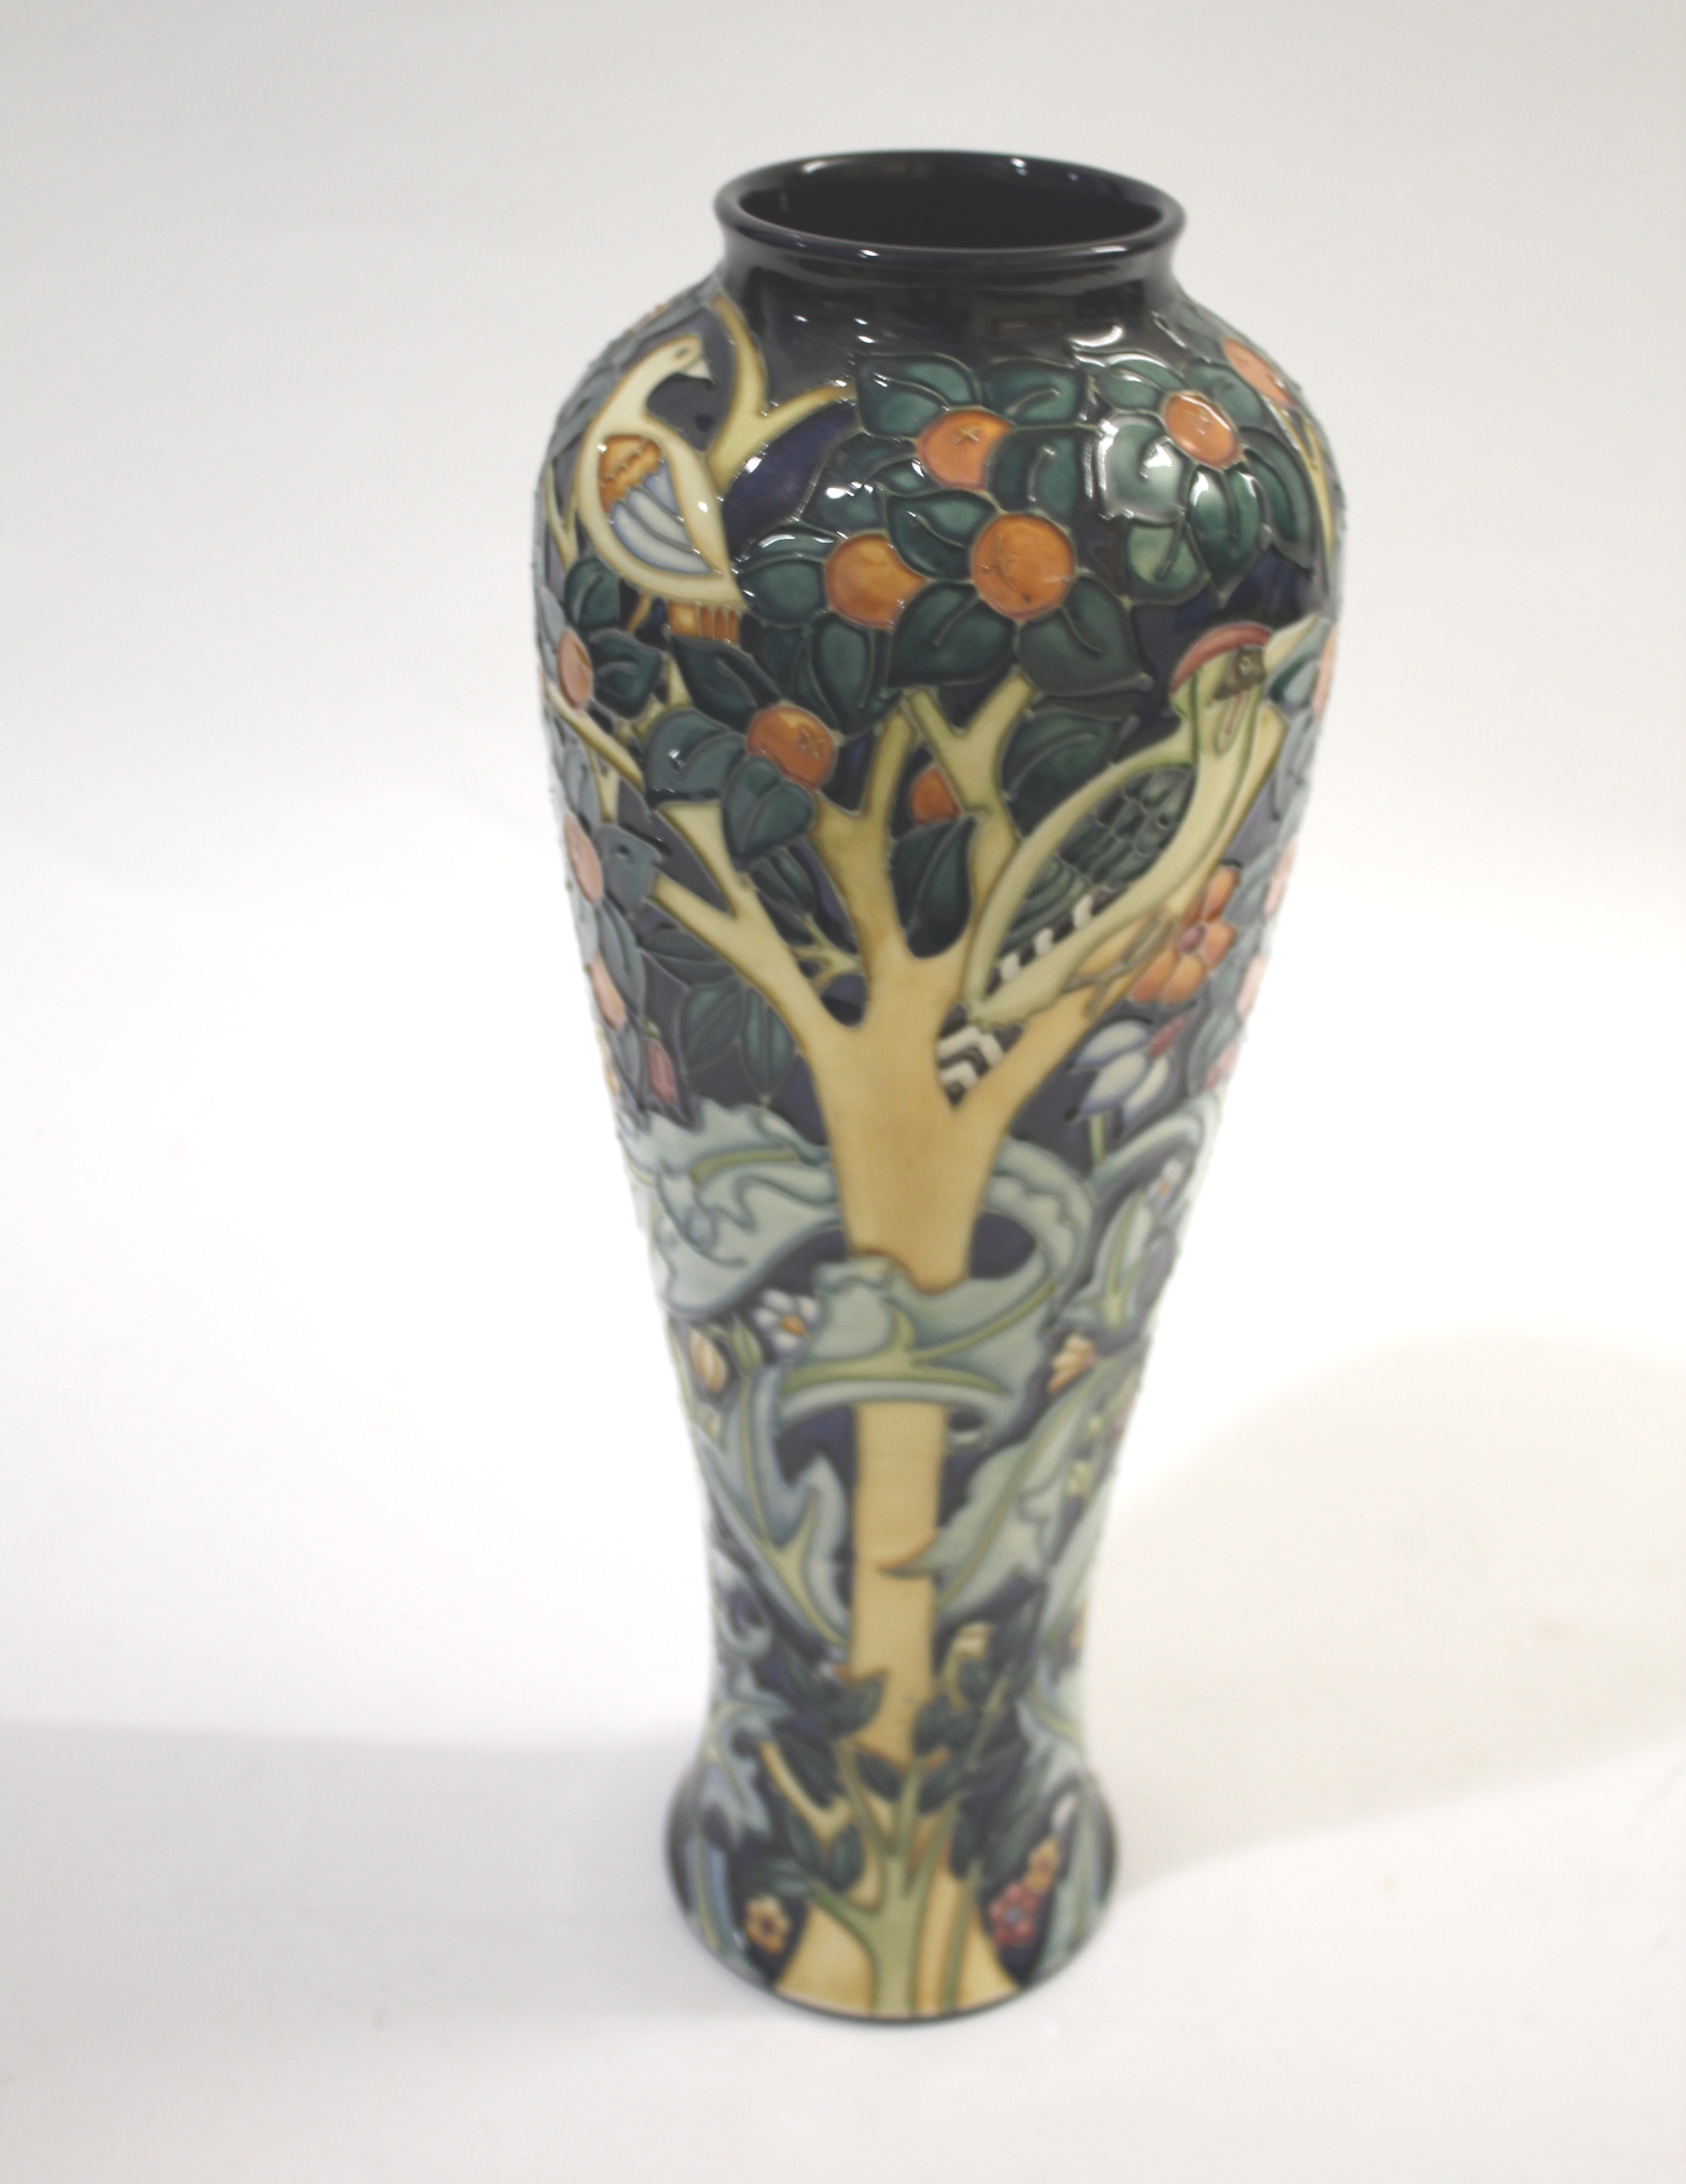 MOORCROFT VASE - TREE BARK THIEF a boxed modern Moorcroft limited edition vase in the Tree Bark - Image 4 of 5